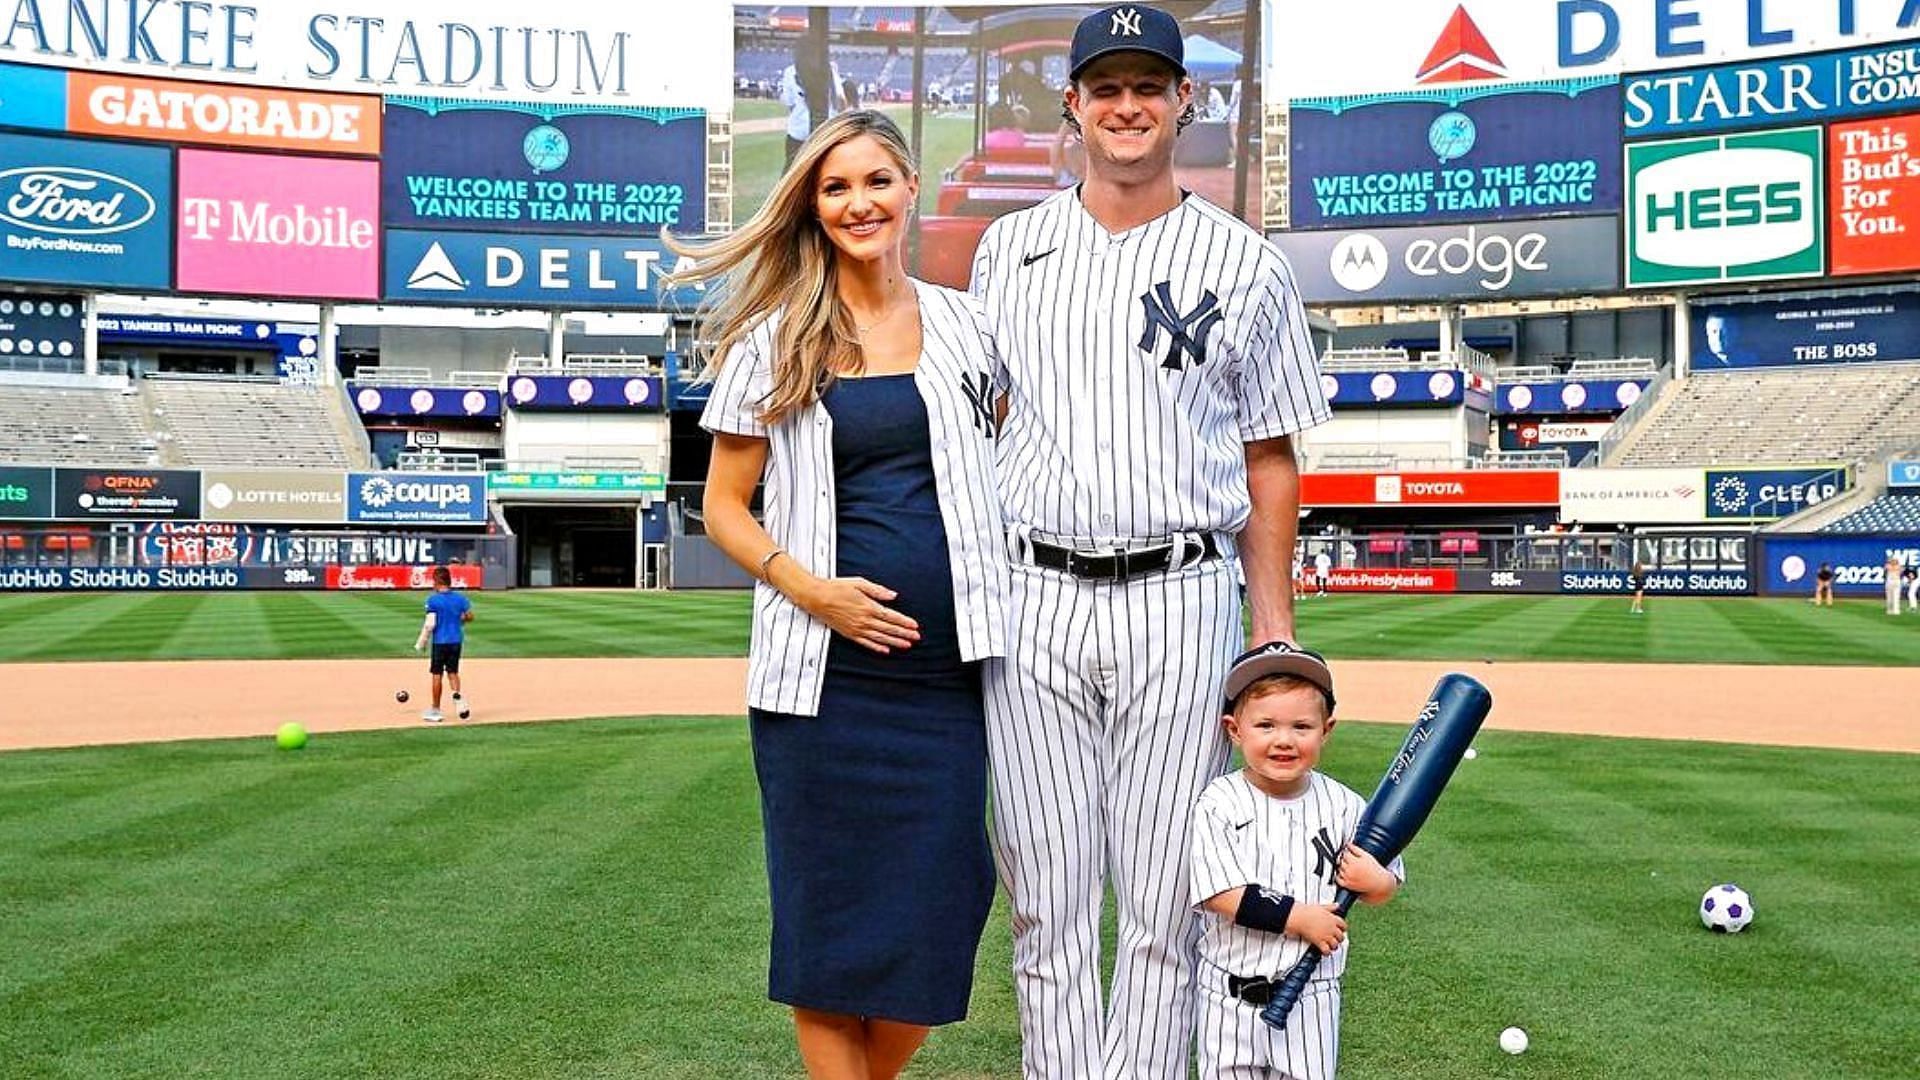 Gerrit Cole's wife, Amy, celebrates Yankees' AL East title